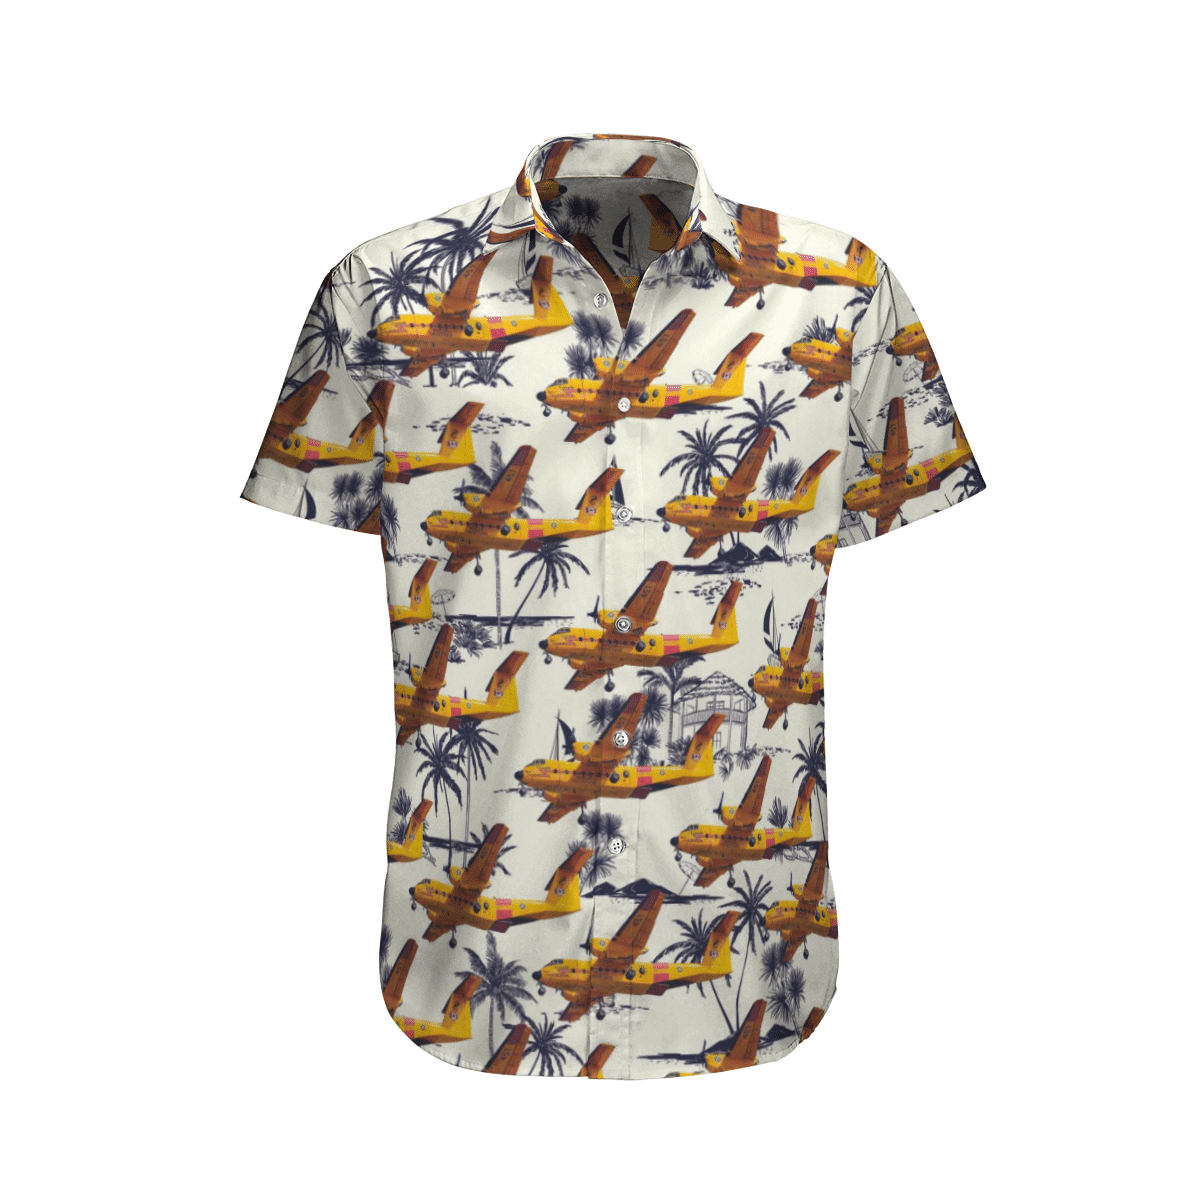 Enjoy your summer with top cool hawaiian shirt below 189